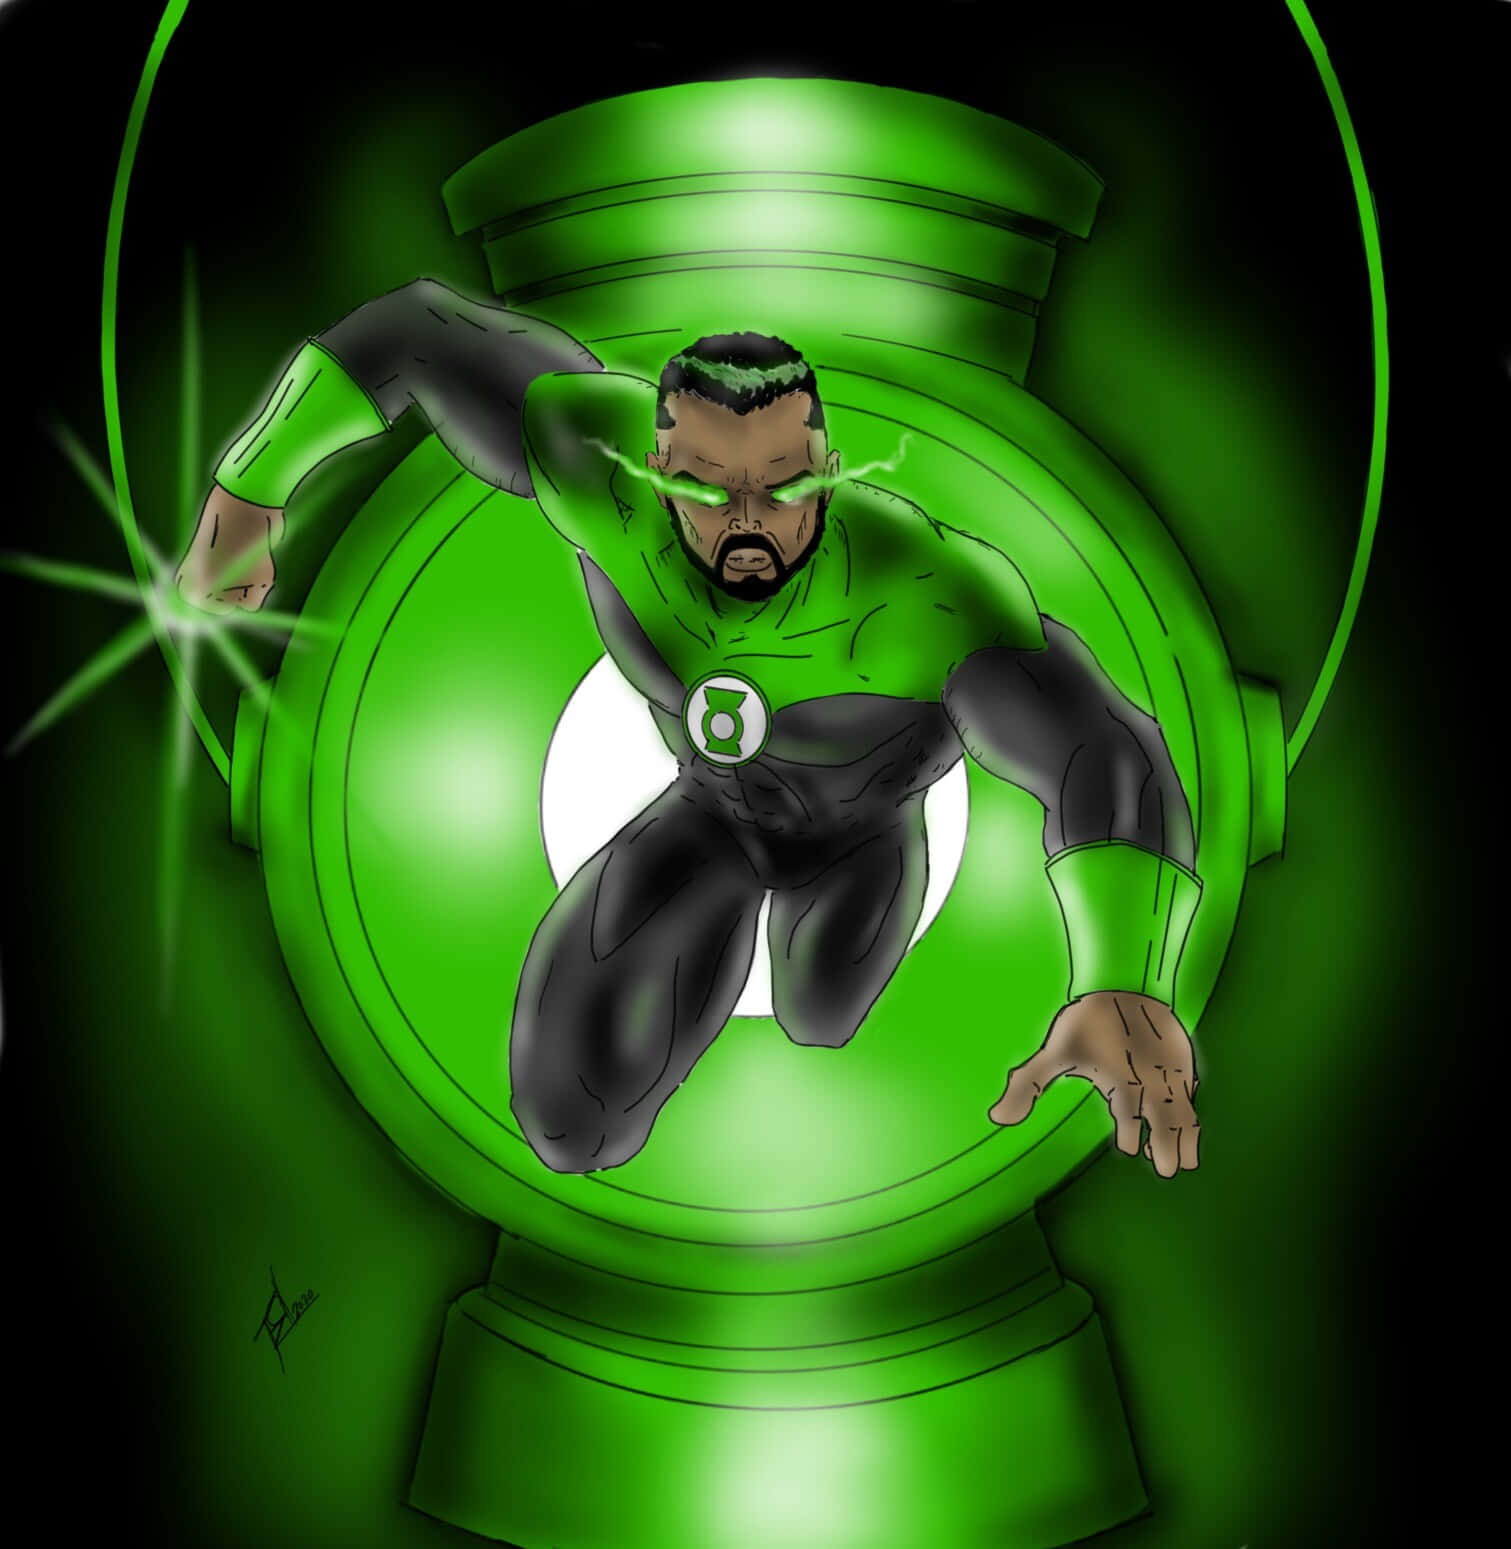 Unmiembro Del Cuerpo De Linternas Verdes Que Empuña Un Poderoso Anillo De Poder.